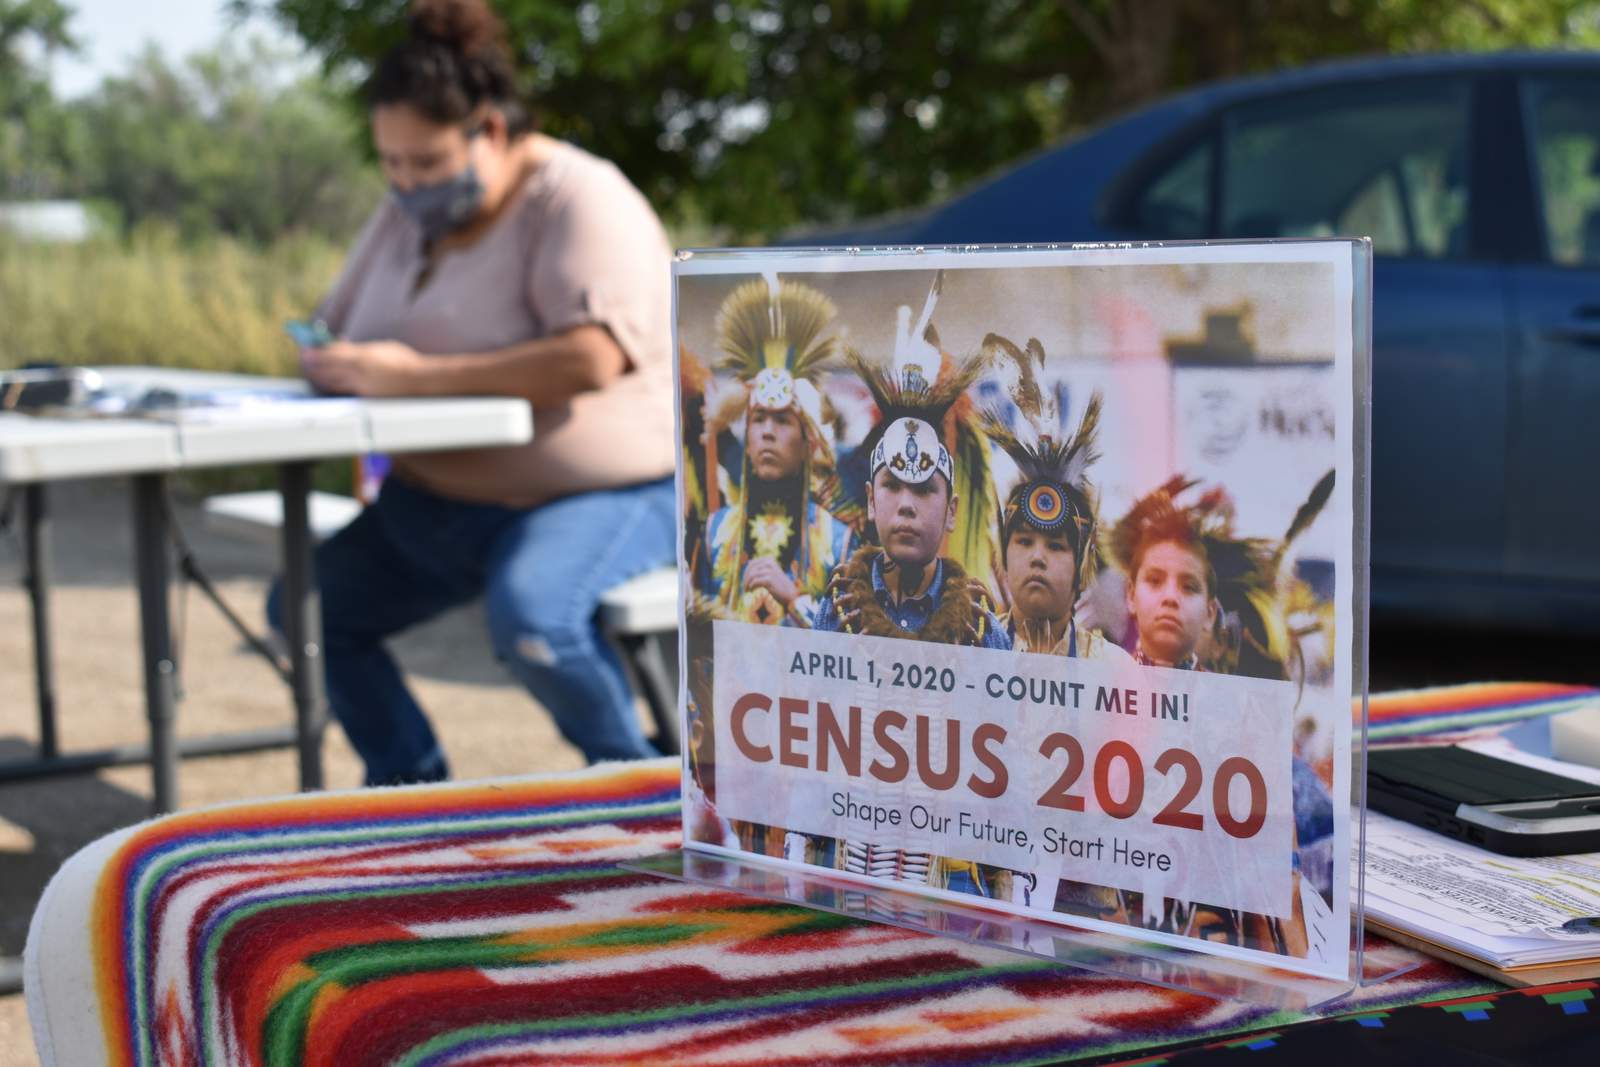 Despite judge's order, plans being made for census layoffs